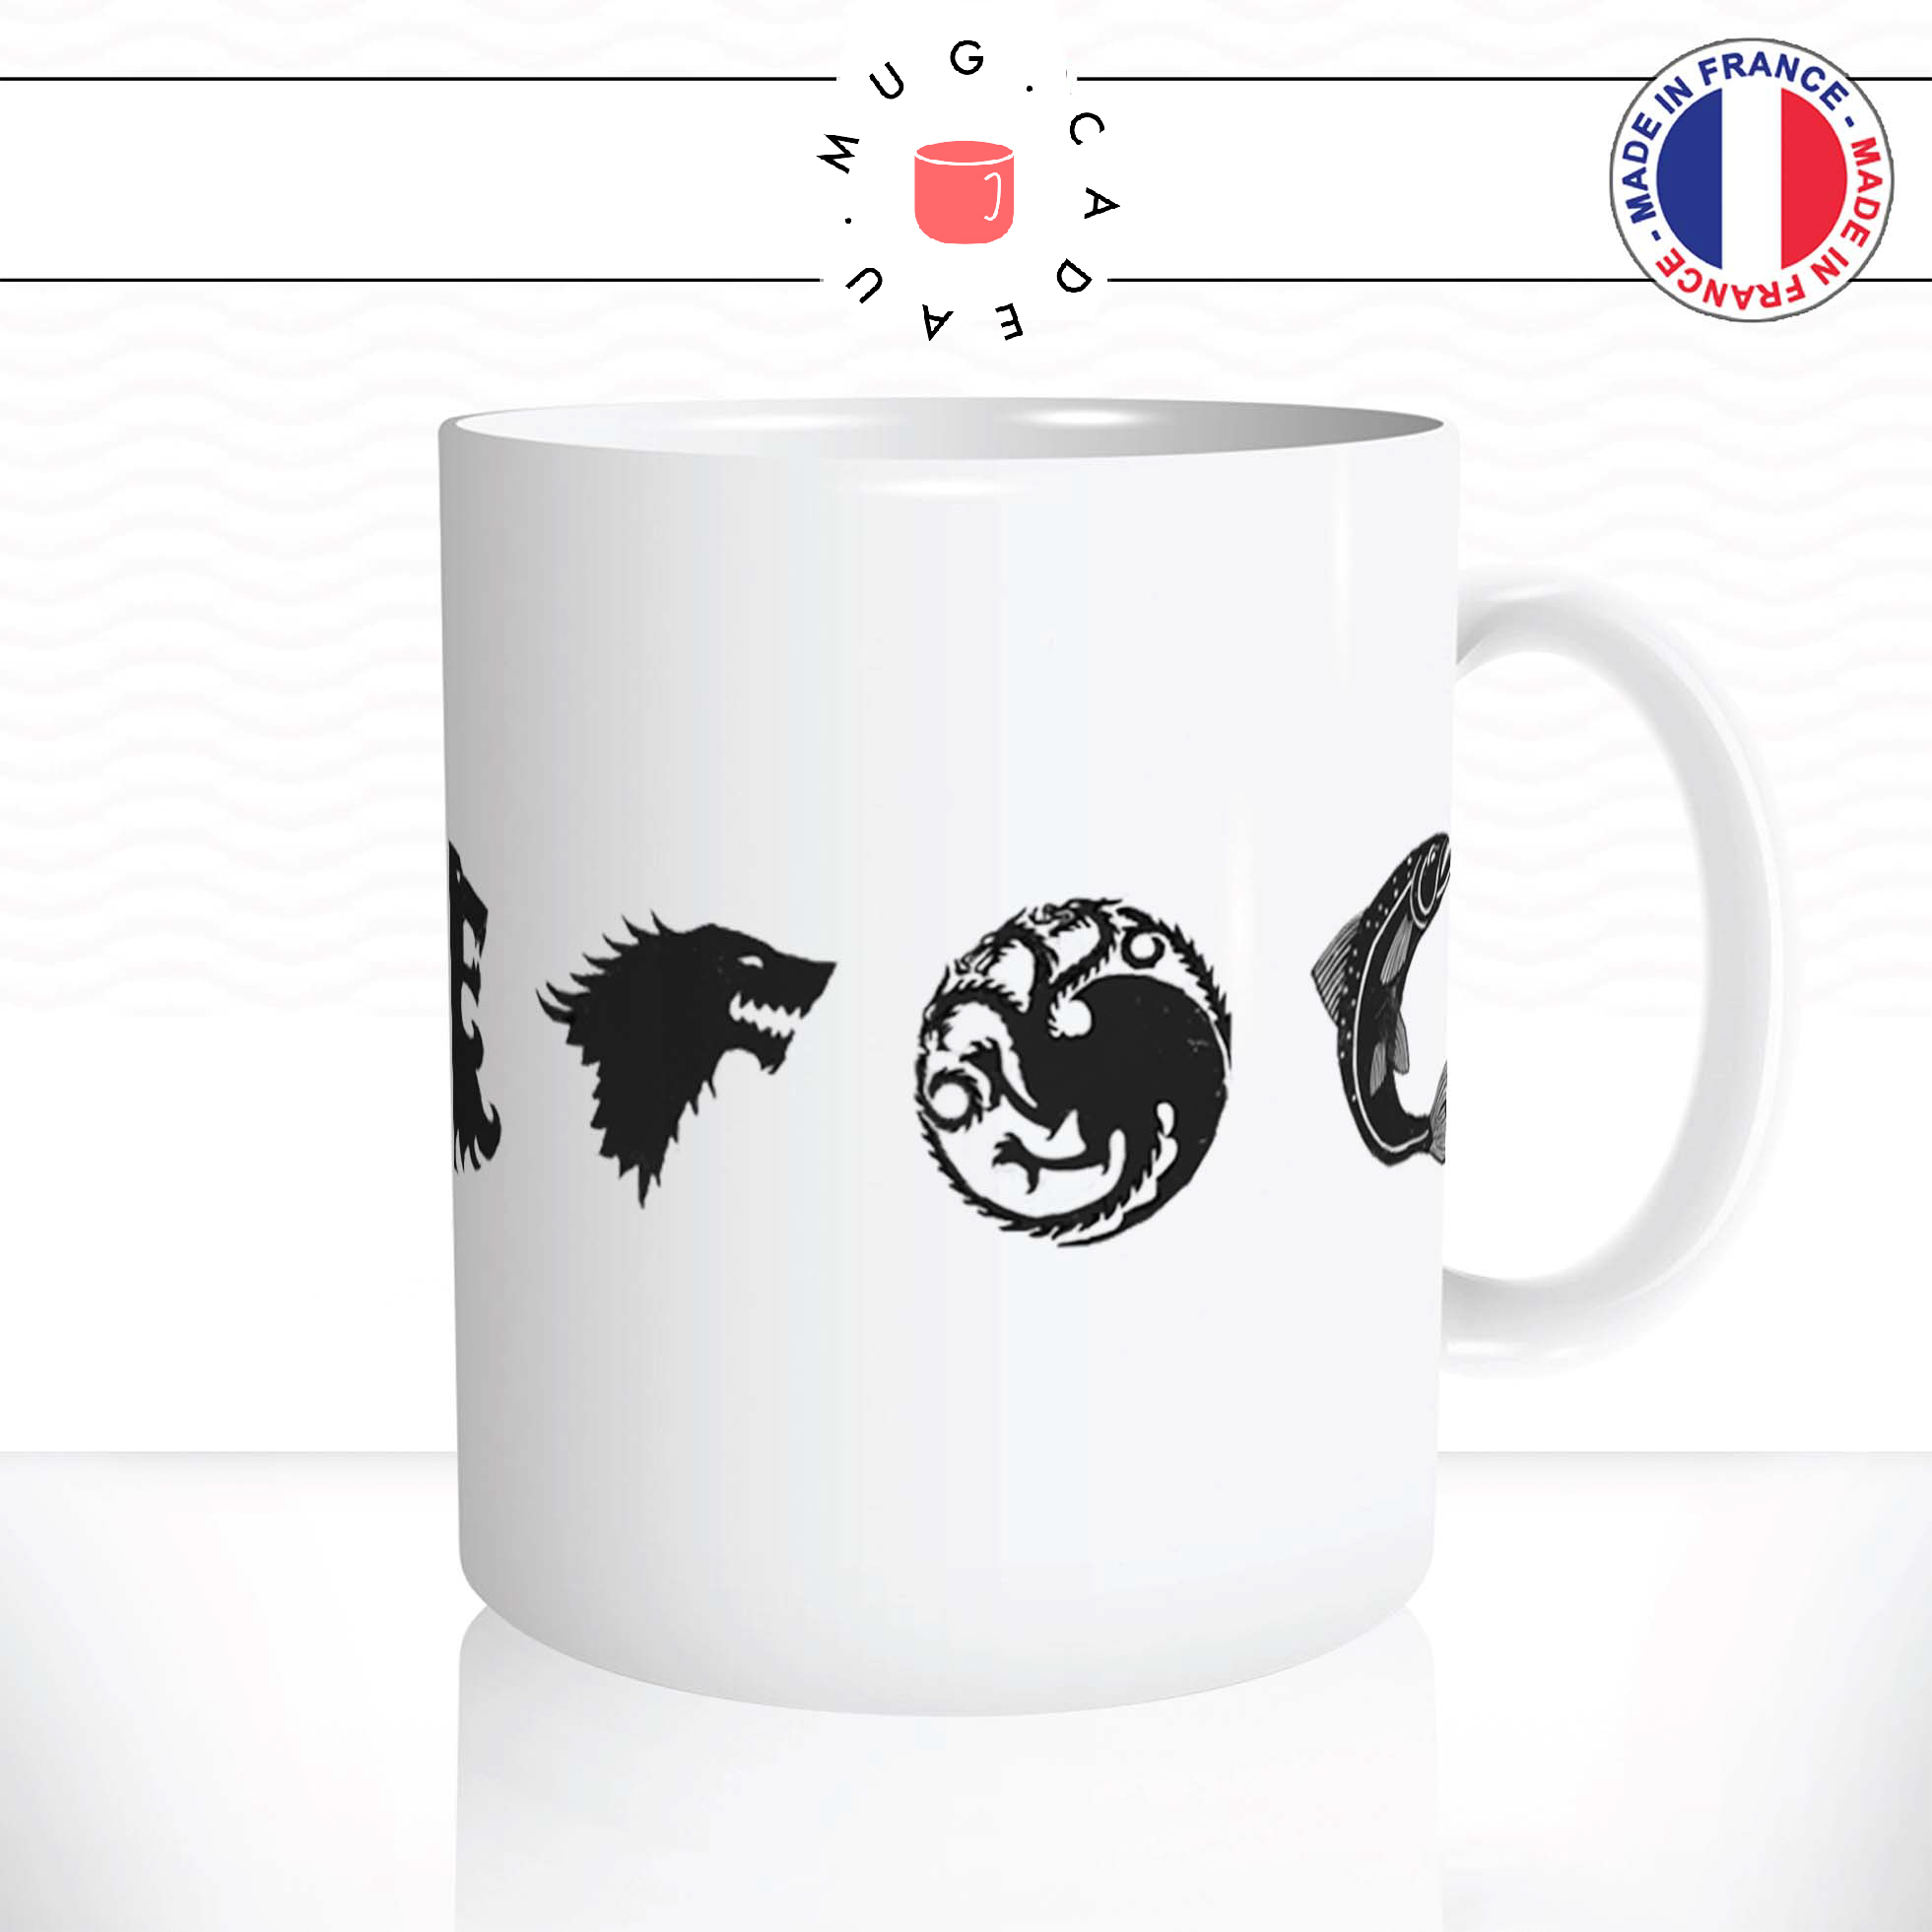 mug-tasse-ref4-film-serie-game-of-thrones-got-logos-noir-blanc-royaumes-familles-cafe-the-mugs-tasses-personnalise-anse-droite